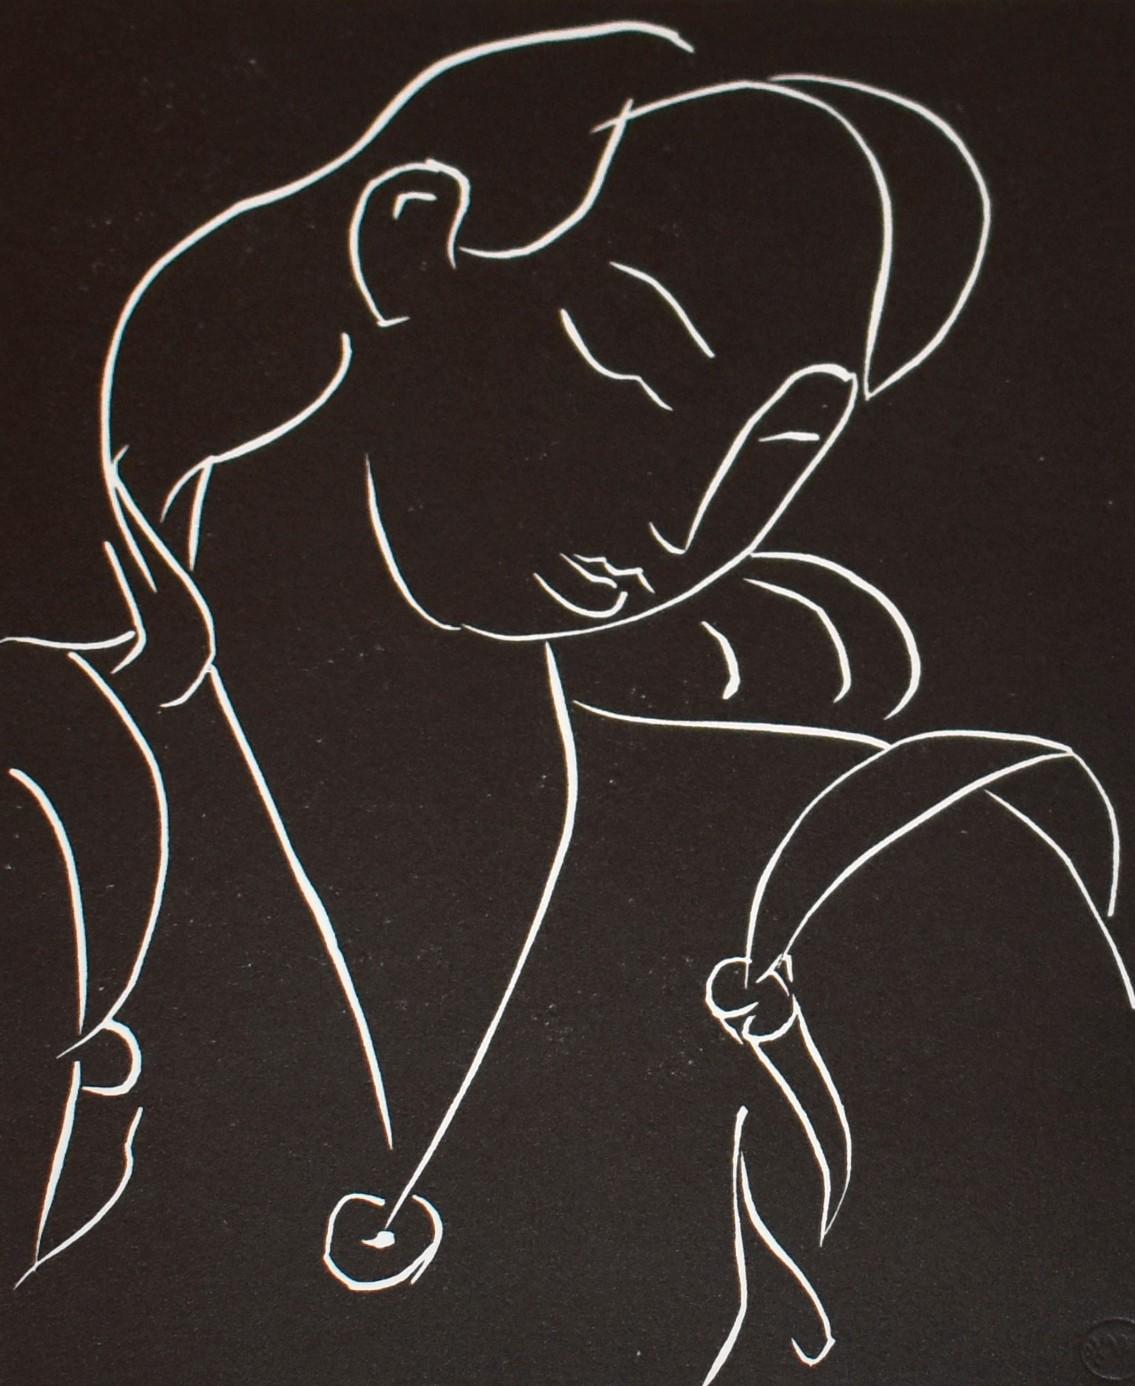 Pasiphae Plate 24 - Print by Henri Matisse